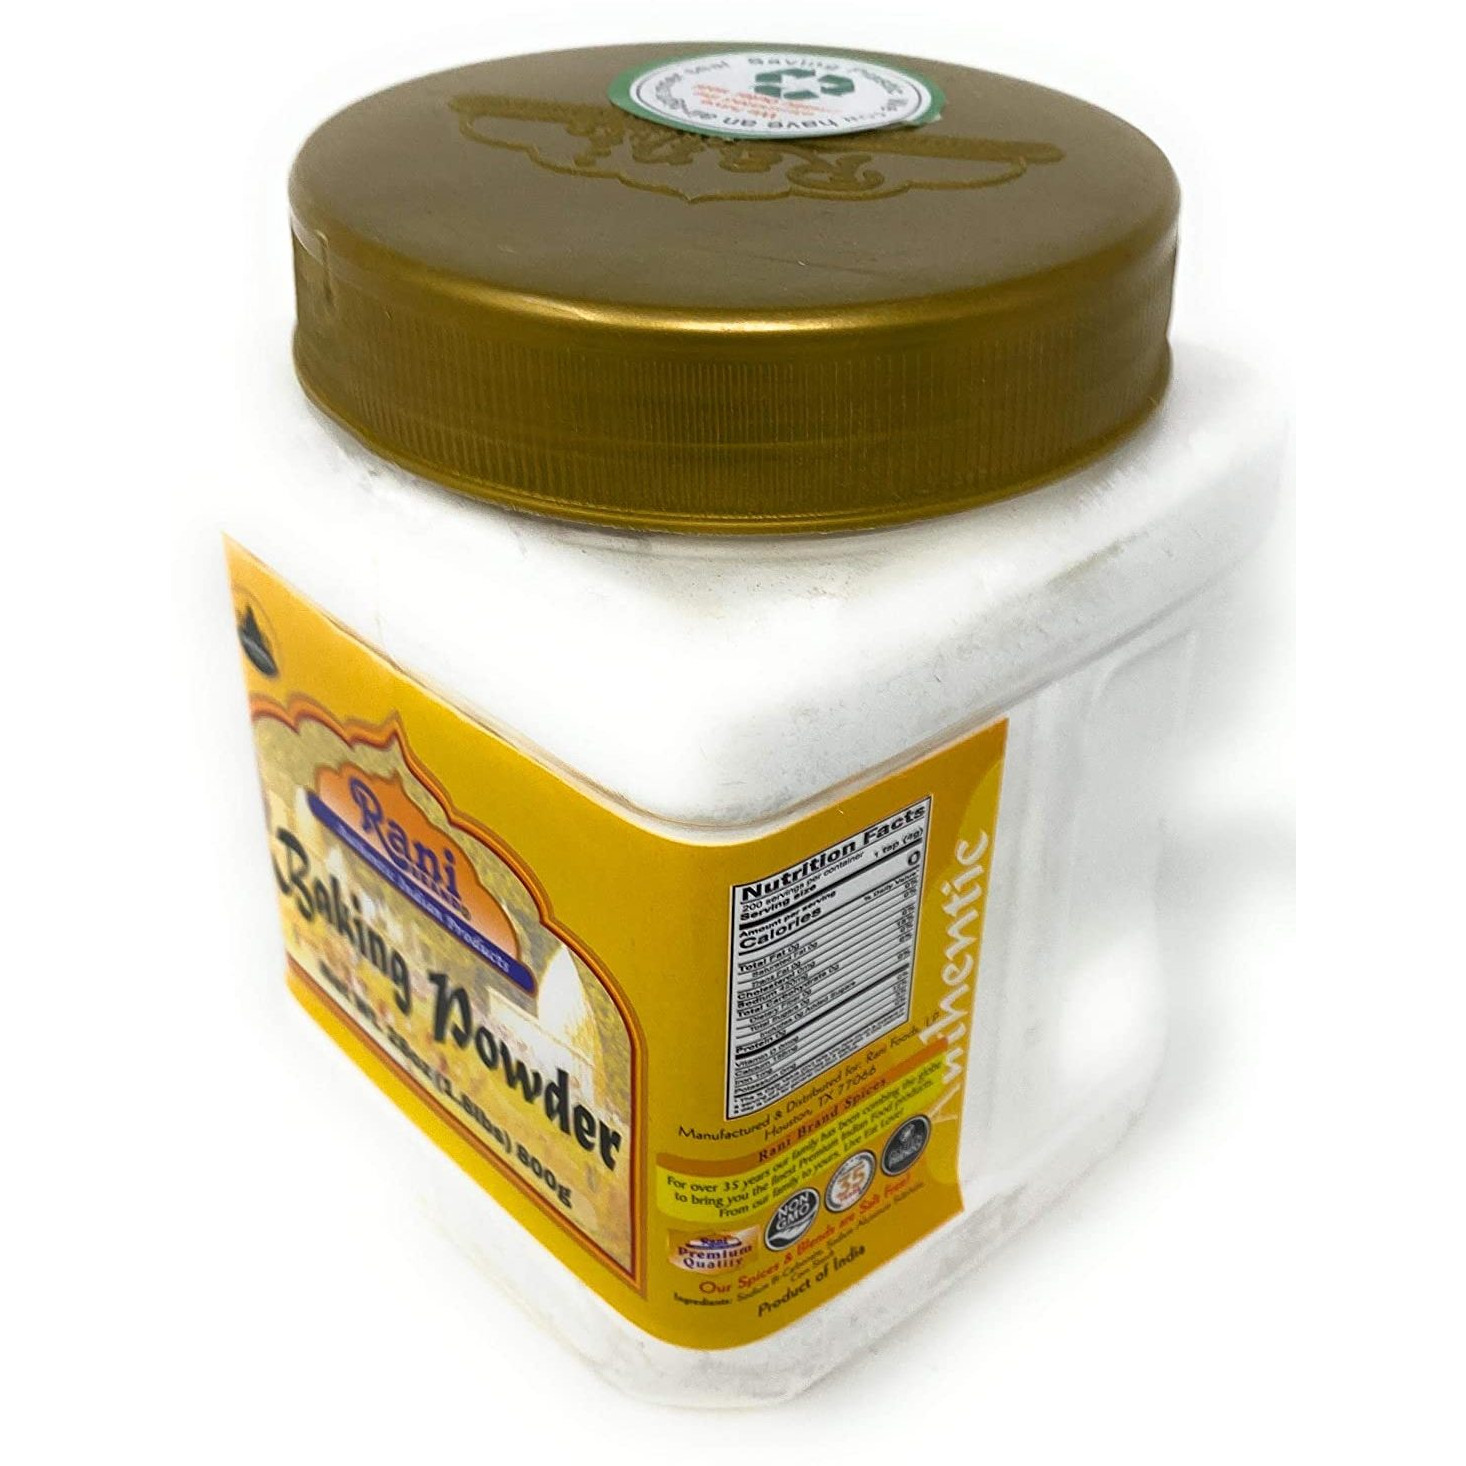 Rani Baking Powder (SODIUM BI-CARBONATE) 28 Ounce (800g) 1.8lbs ~ Used for cooking, NON-GMO | Indian Origin | Gluten Friendly